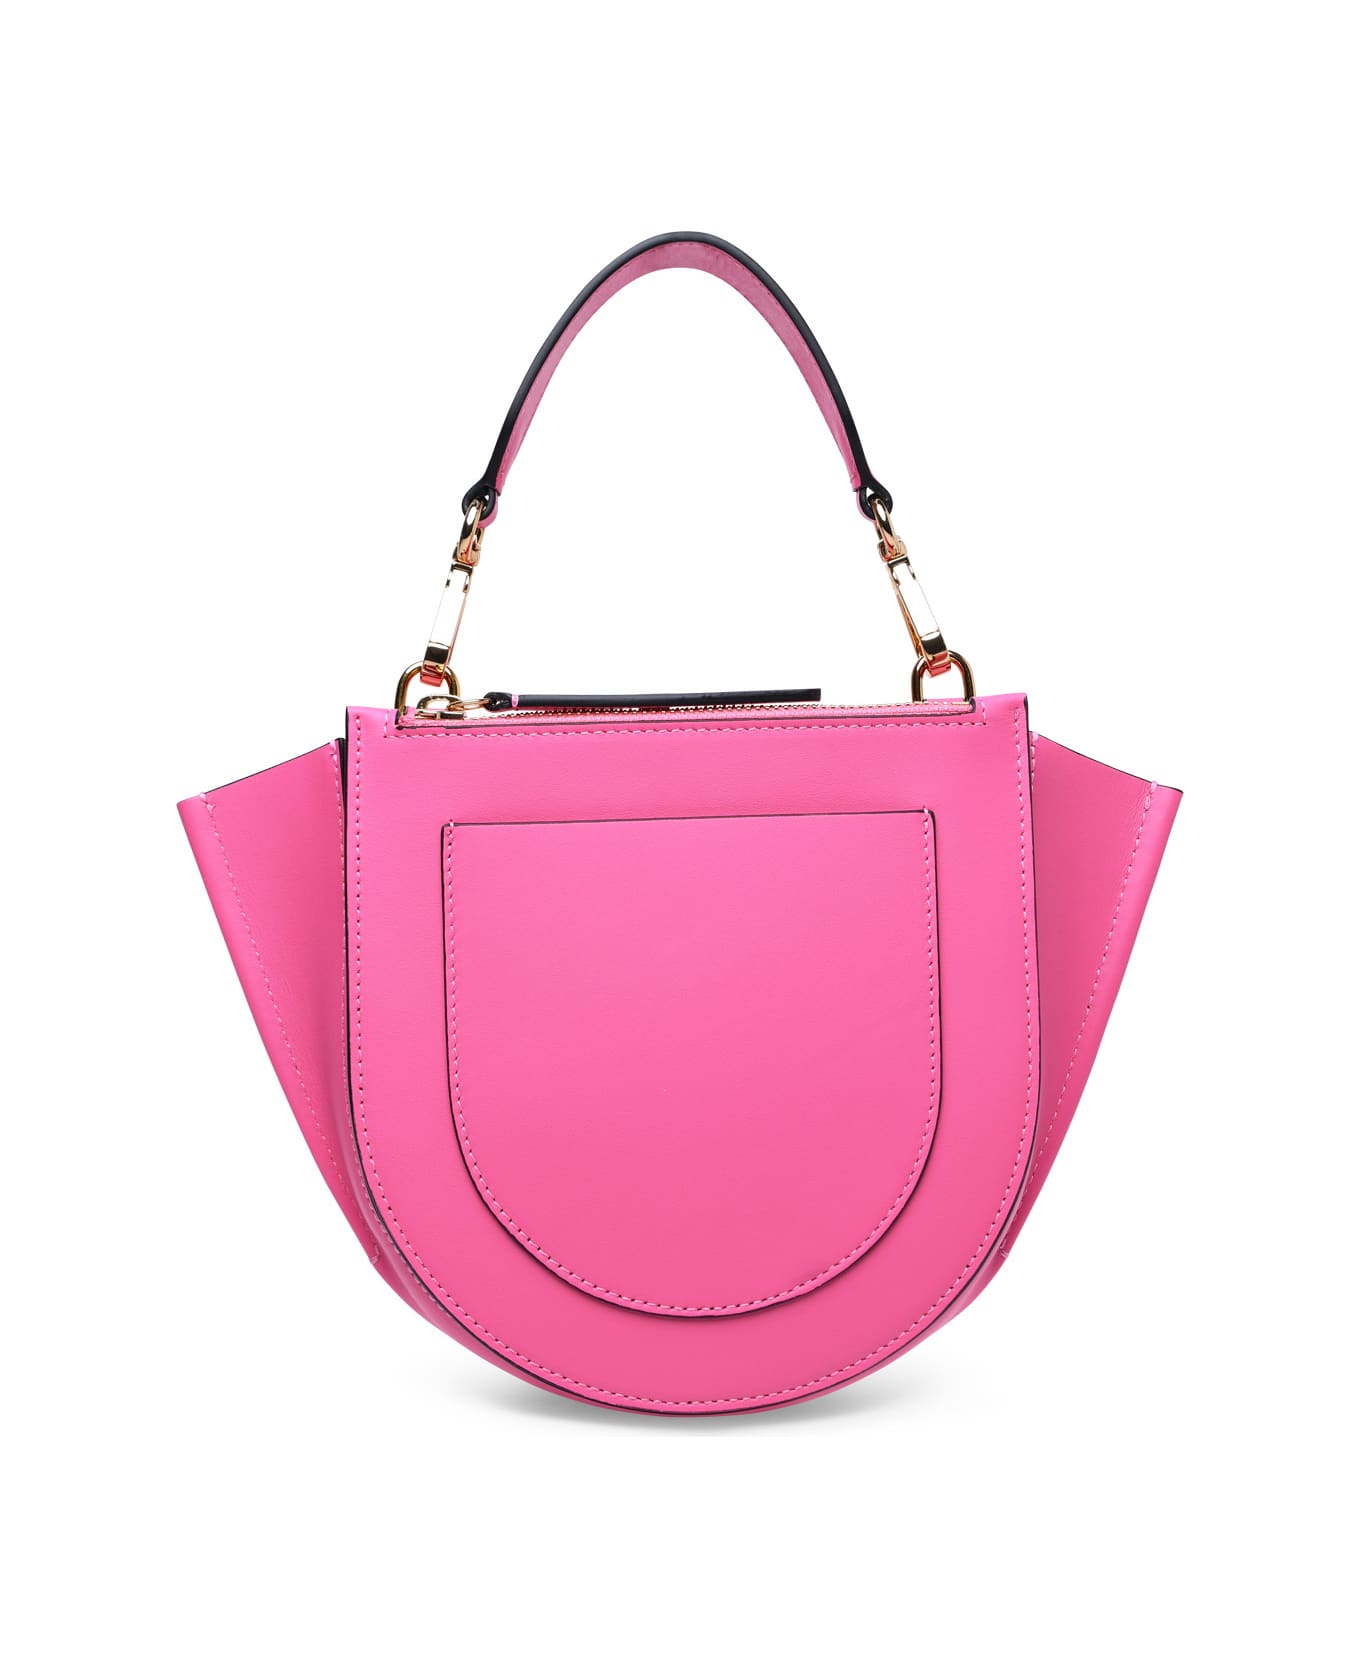 Wandler 'hortensia' Mini Bag In Pink Calf Leather - Fuchsia